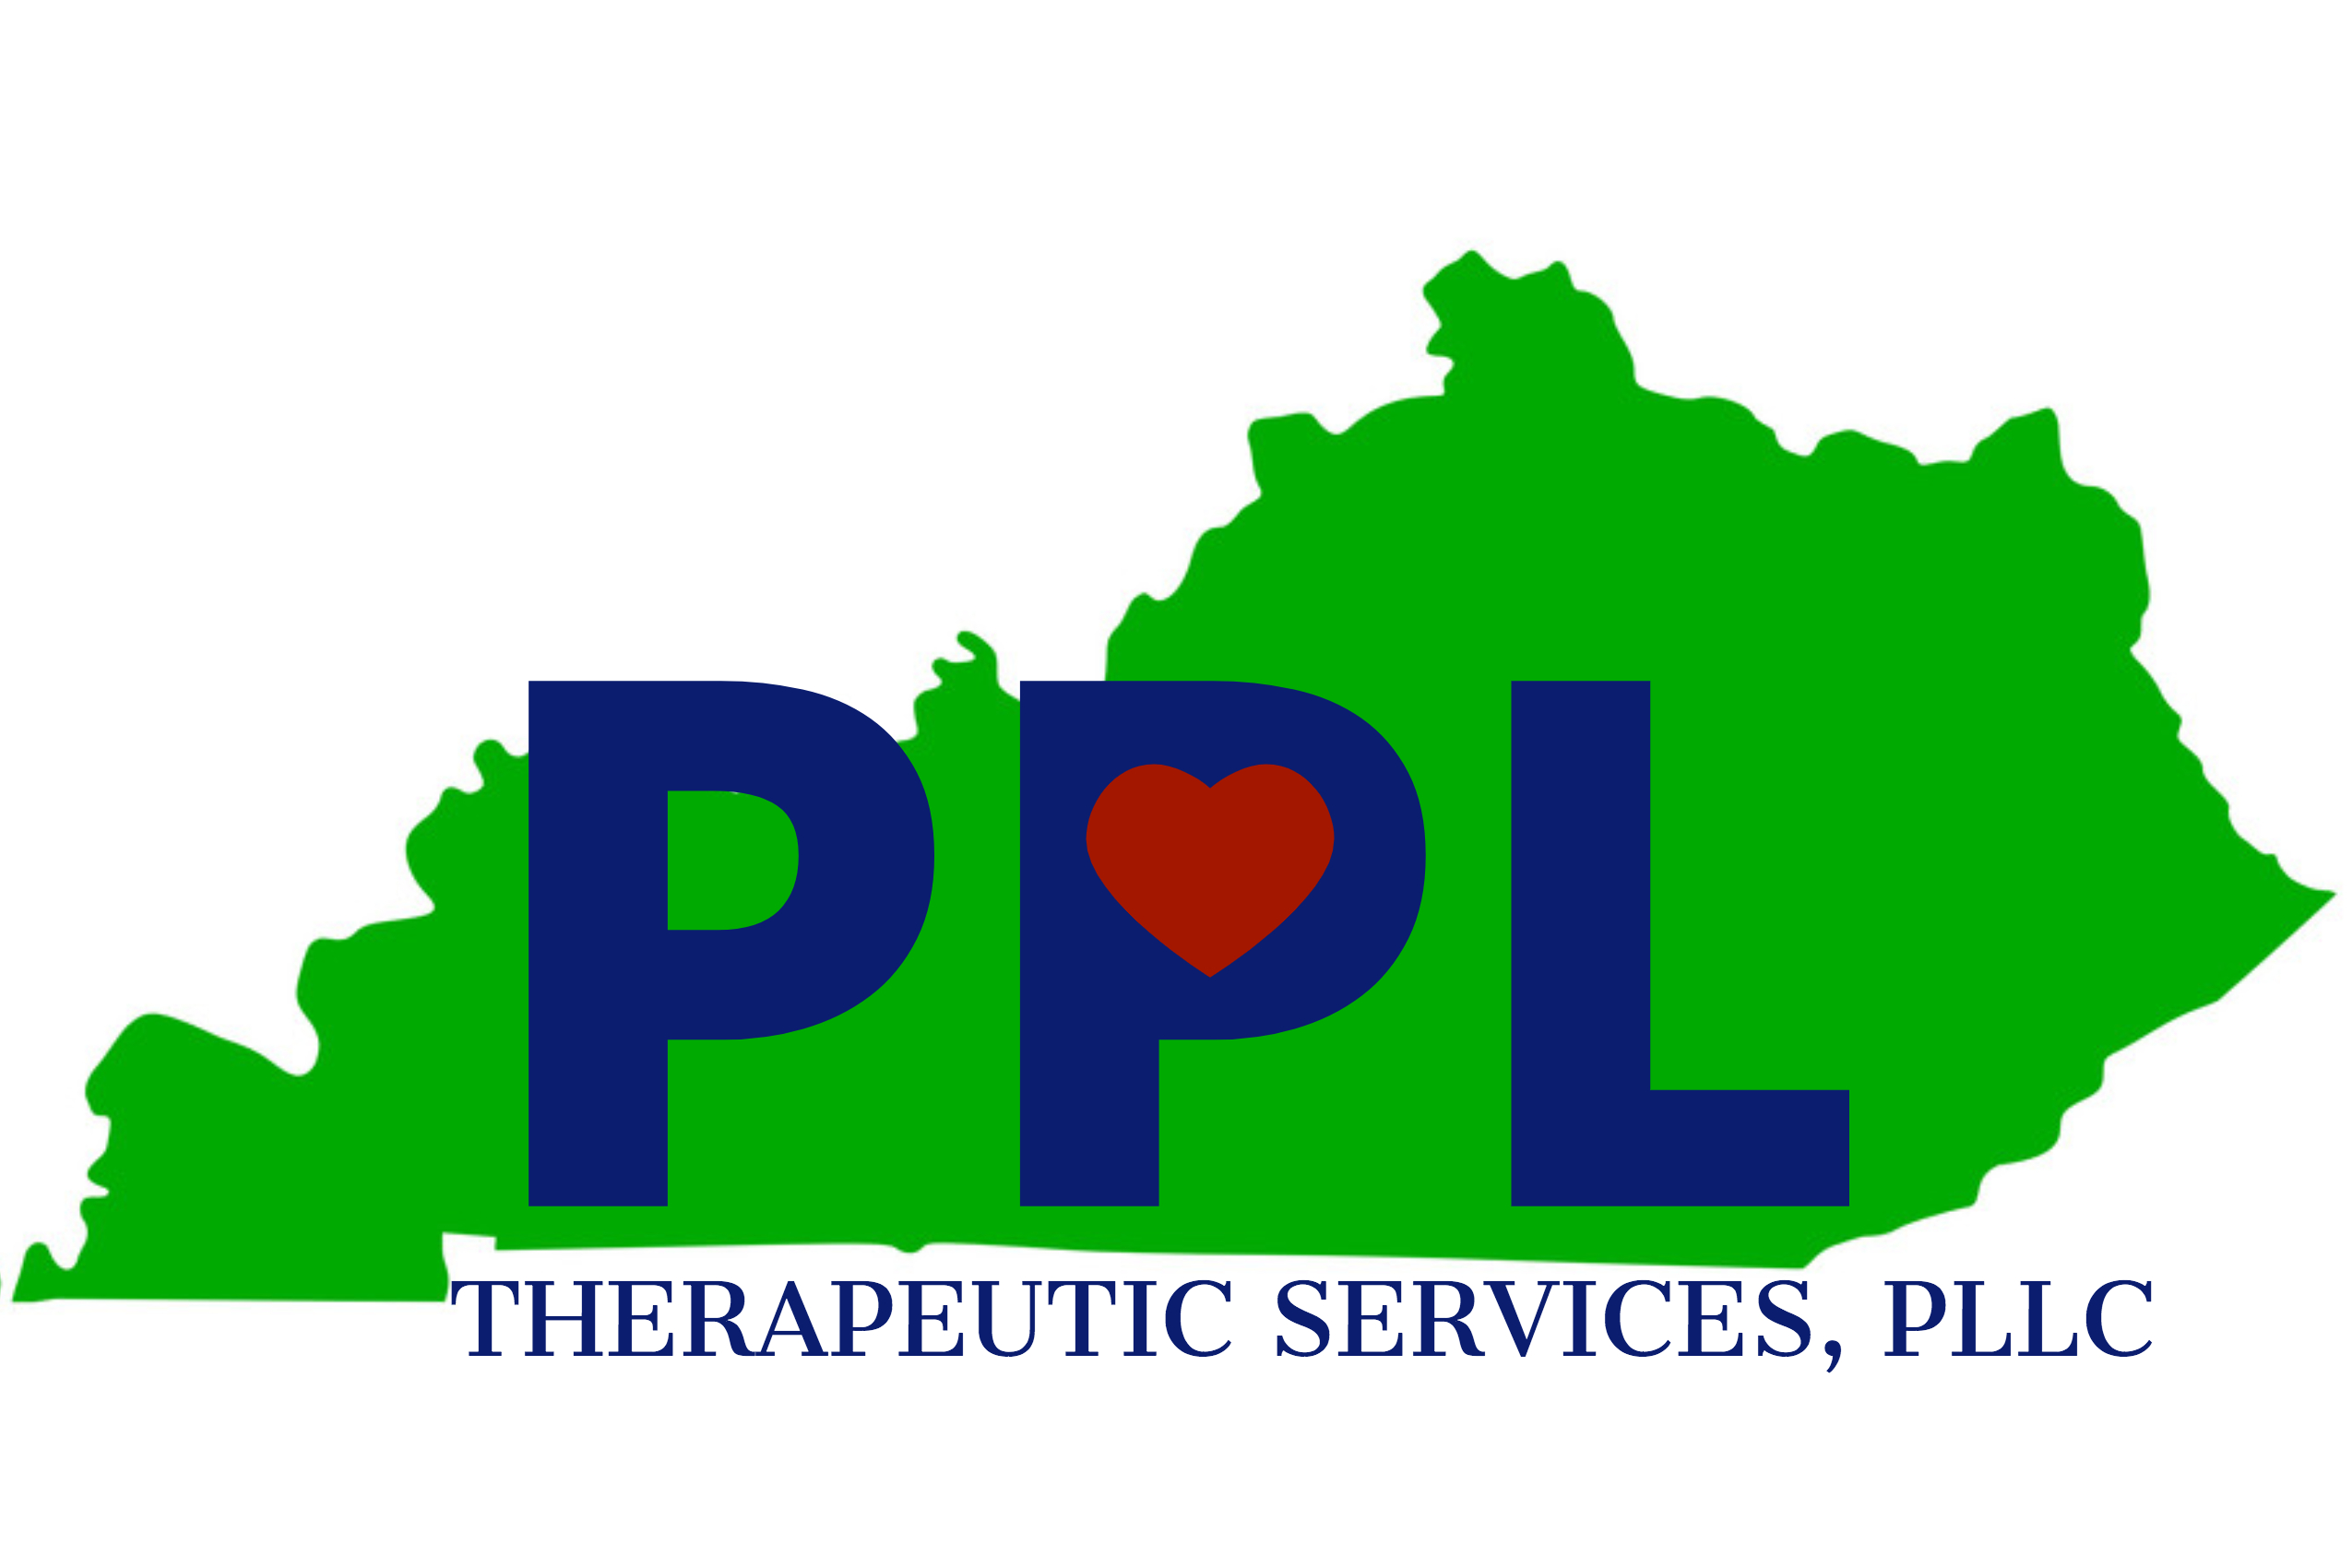 PPL Therapeutic Services, PLLC